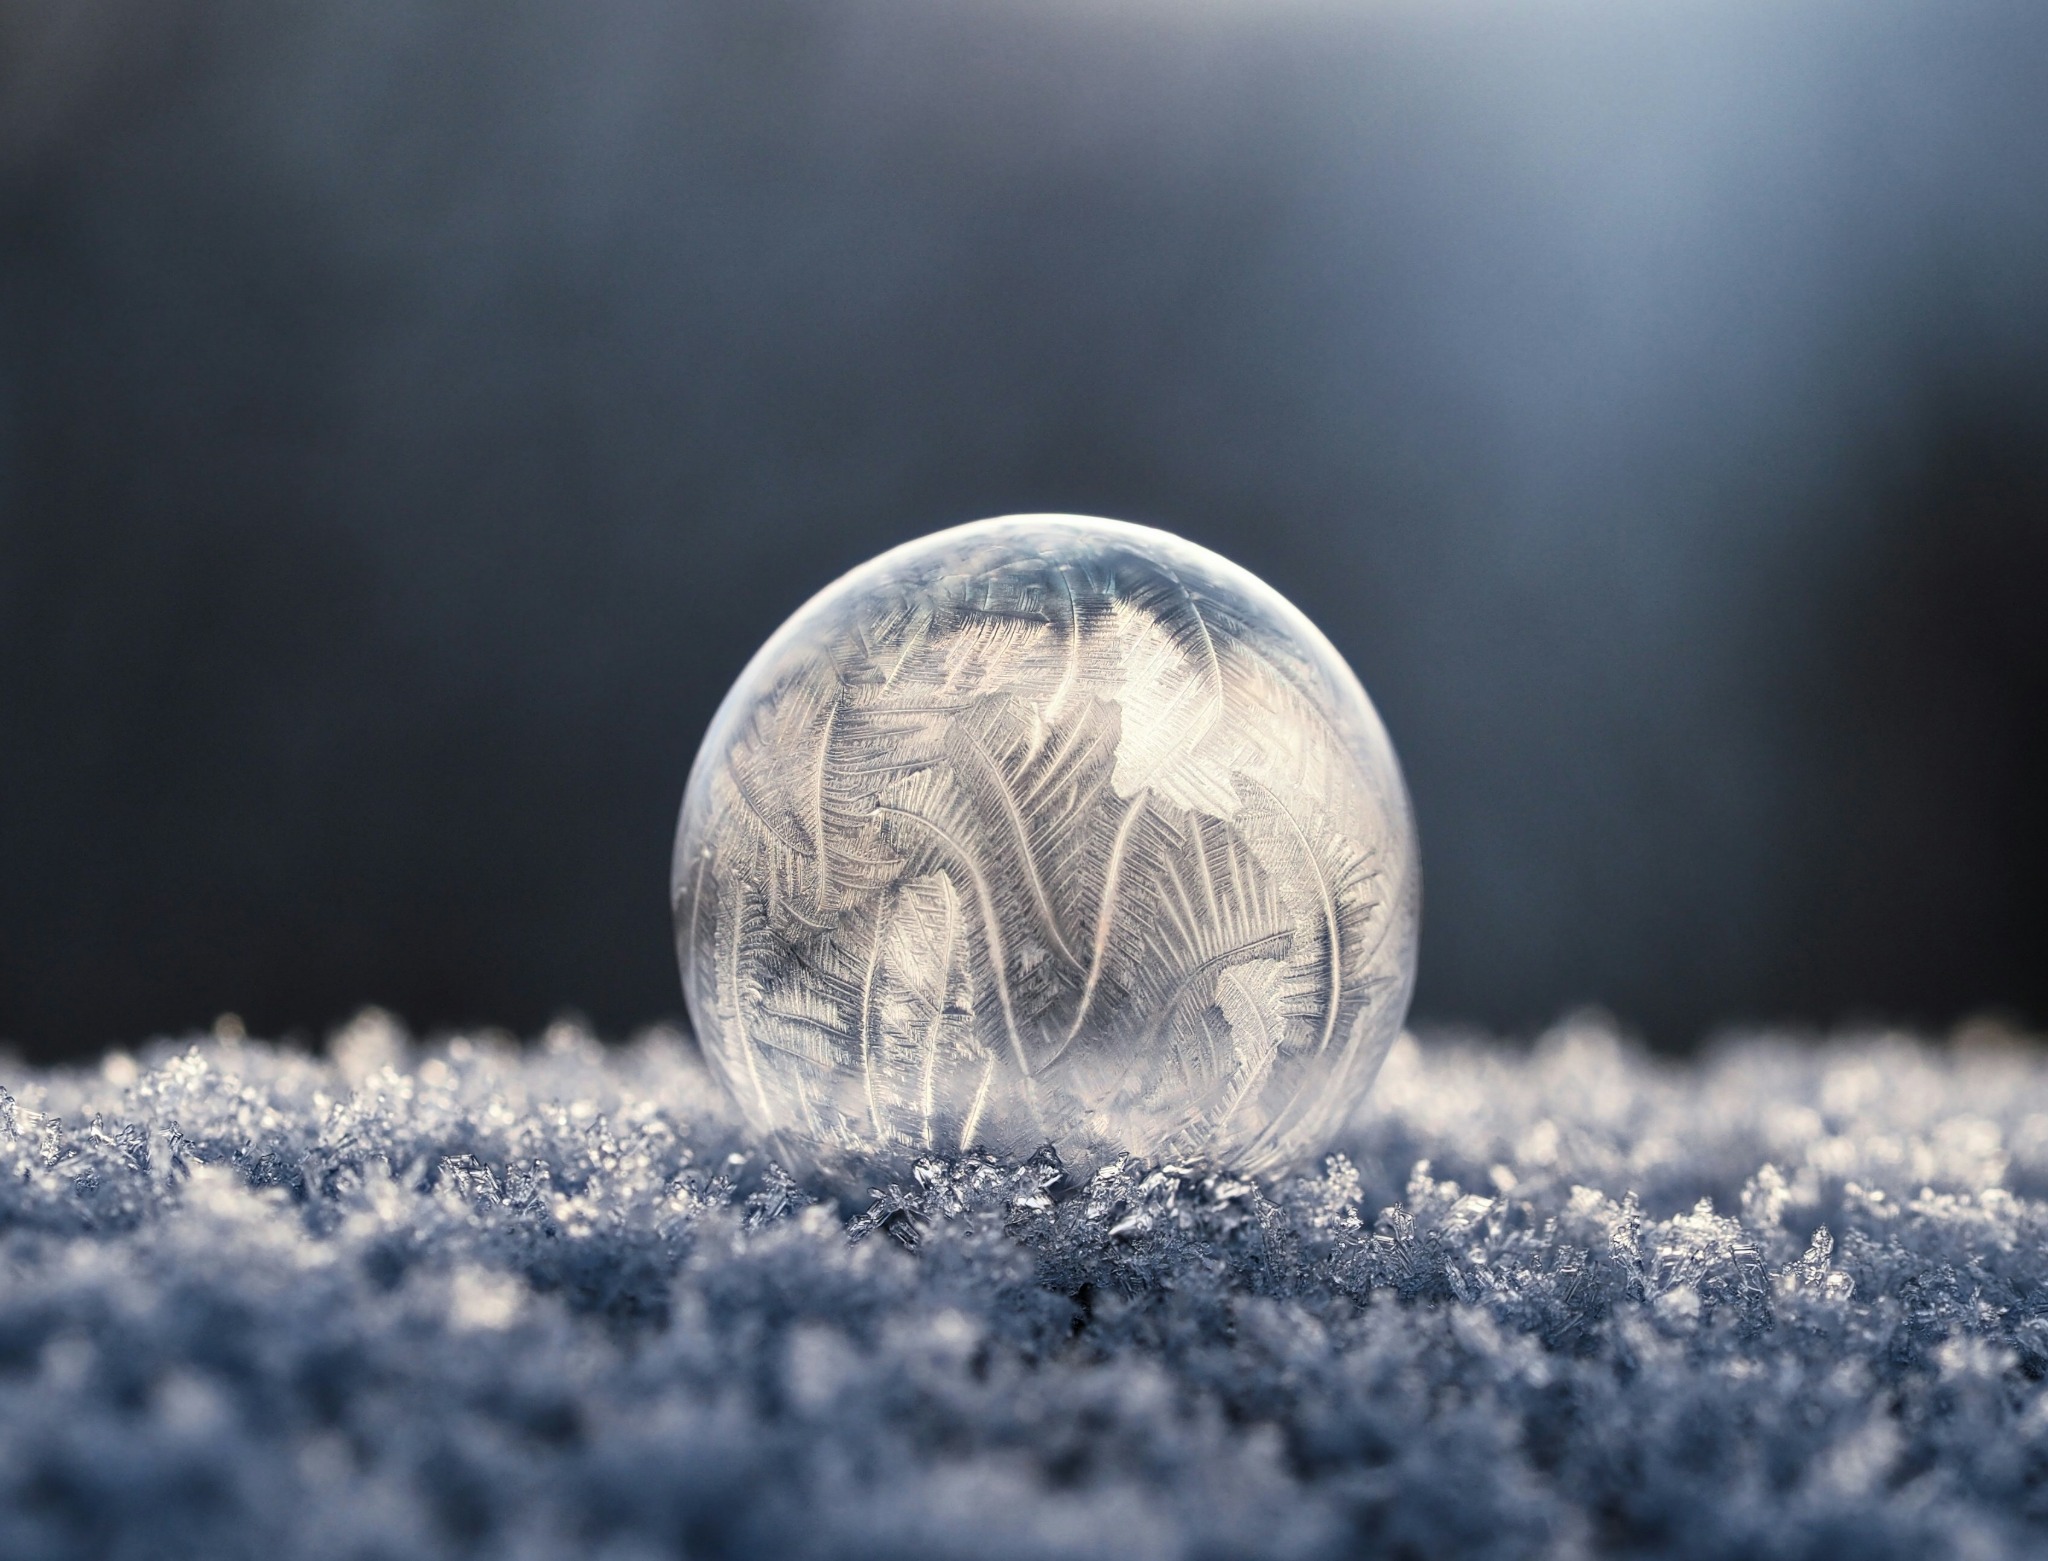 Frozen bubble crystal patterns